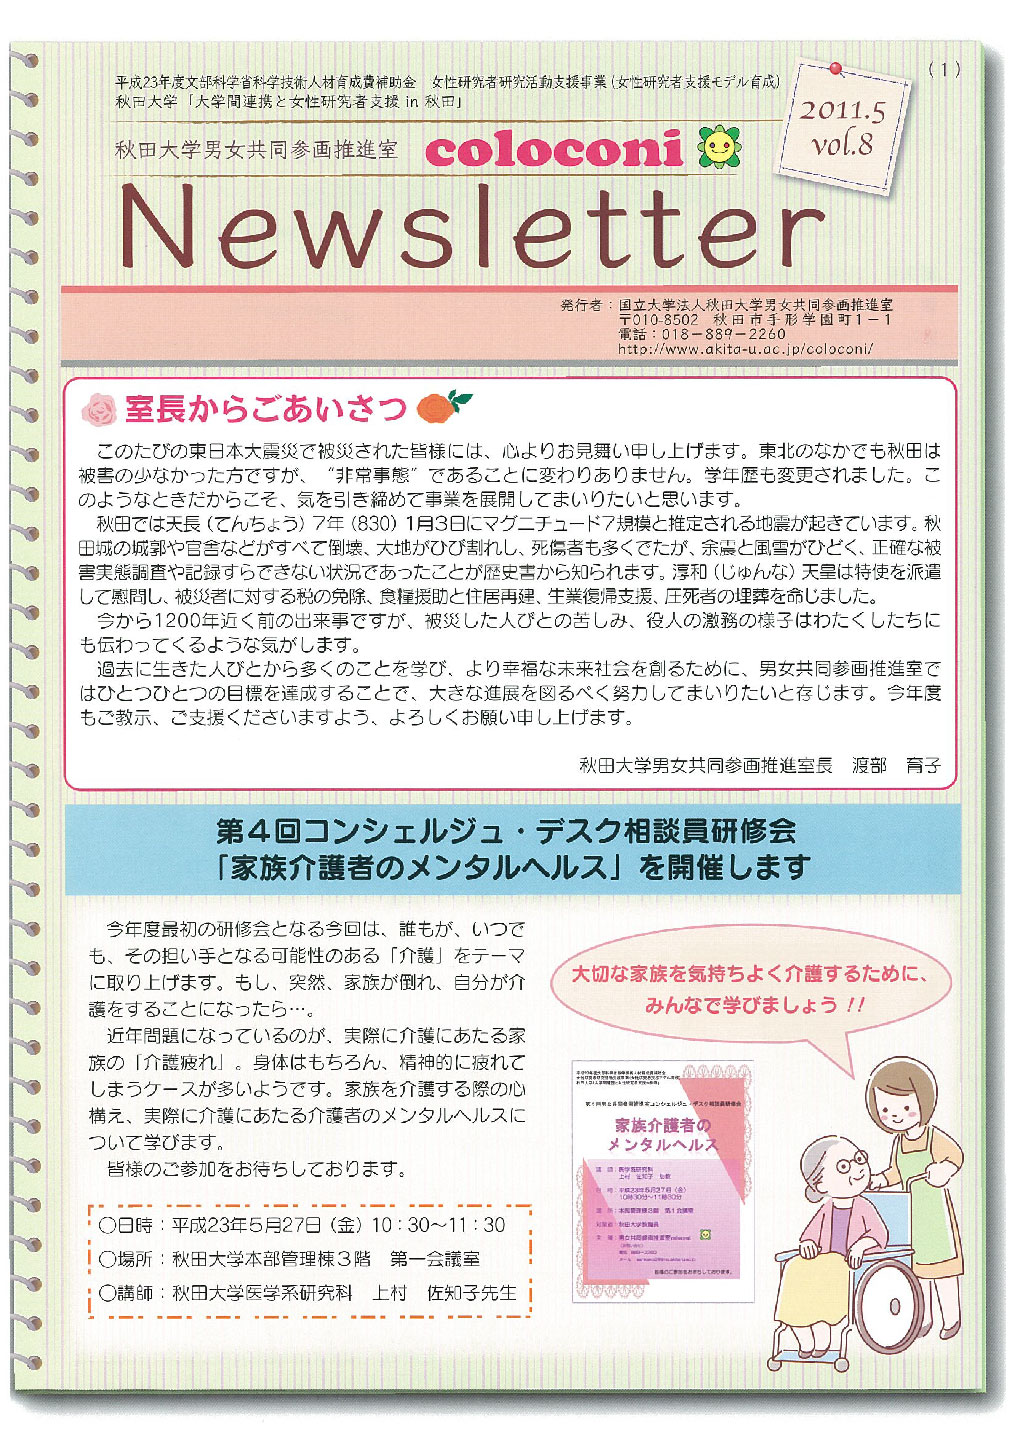 Newsletter　【vol.8 (2011.5)】 